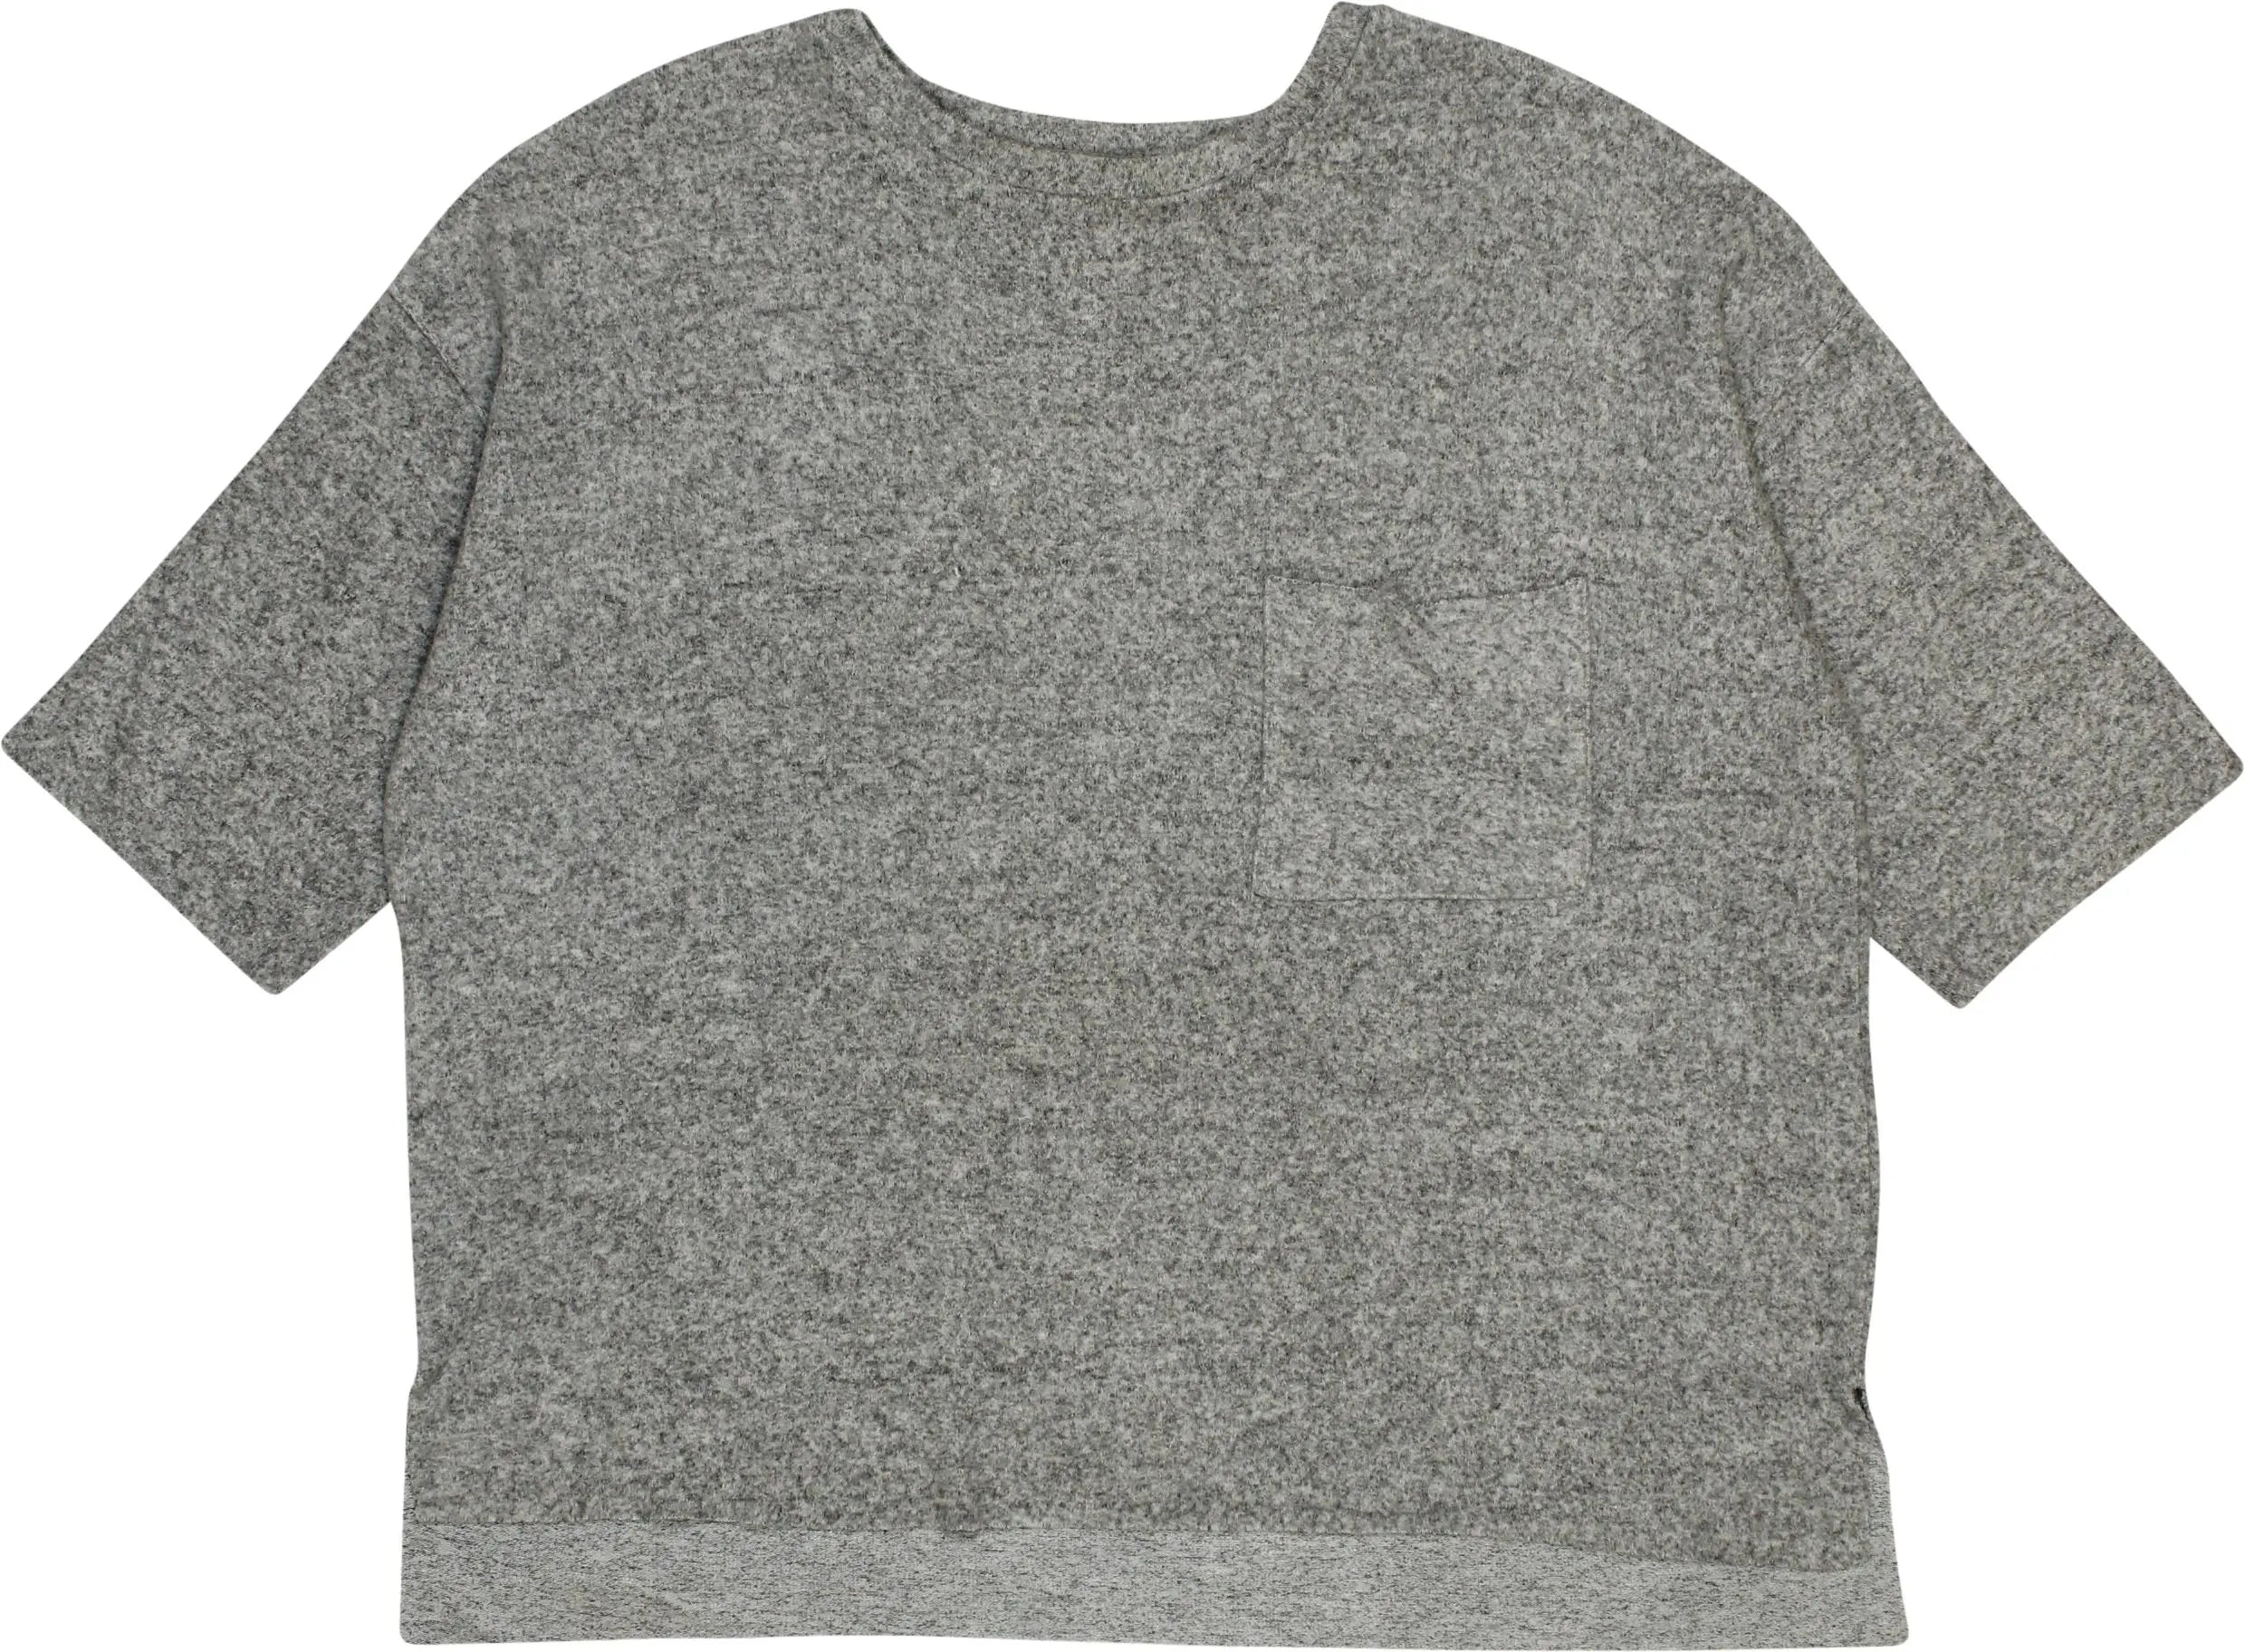 Zara - Grey Plain Jumper- ThriftTale.com - Vintage and second handclothing